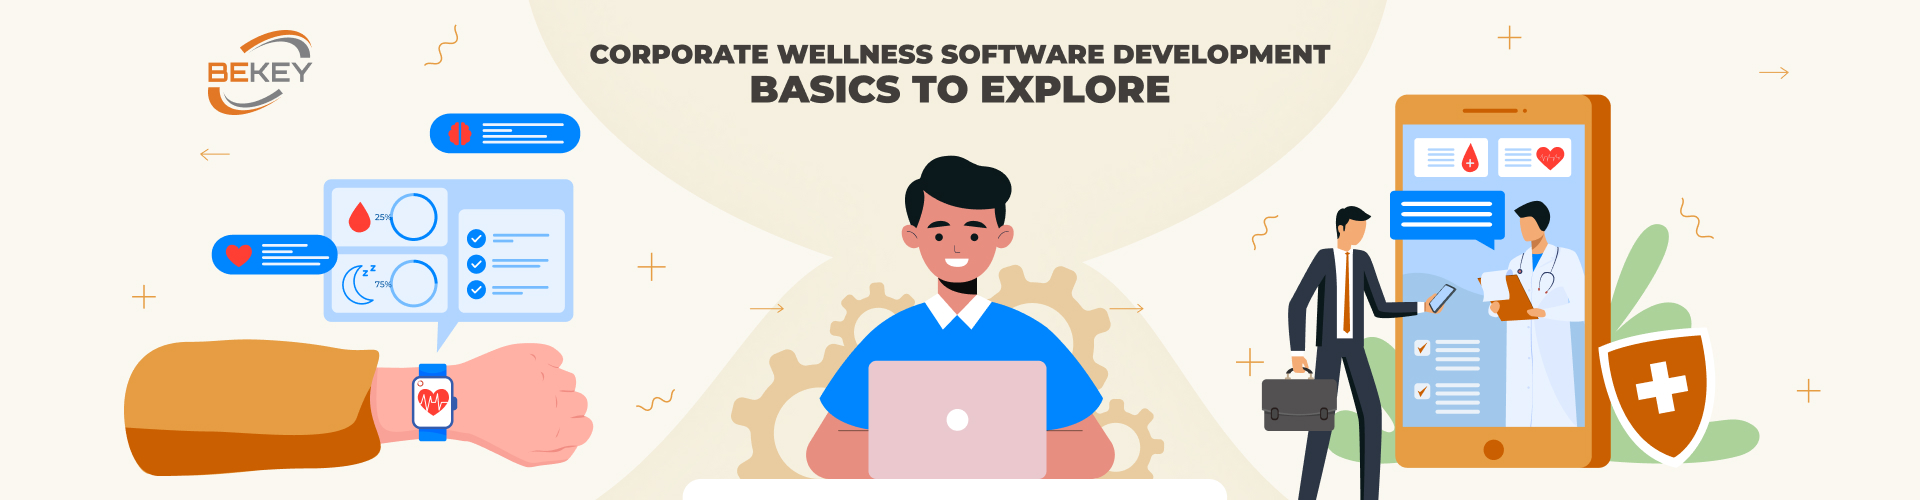 Corporate Wellness Software Development — Basics to Explore - image